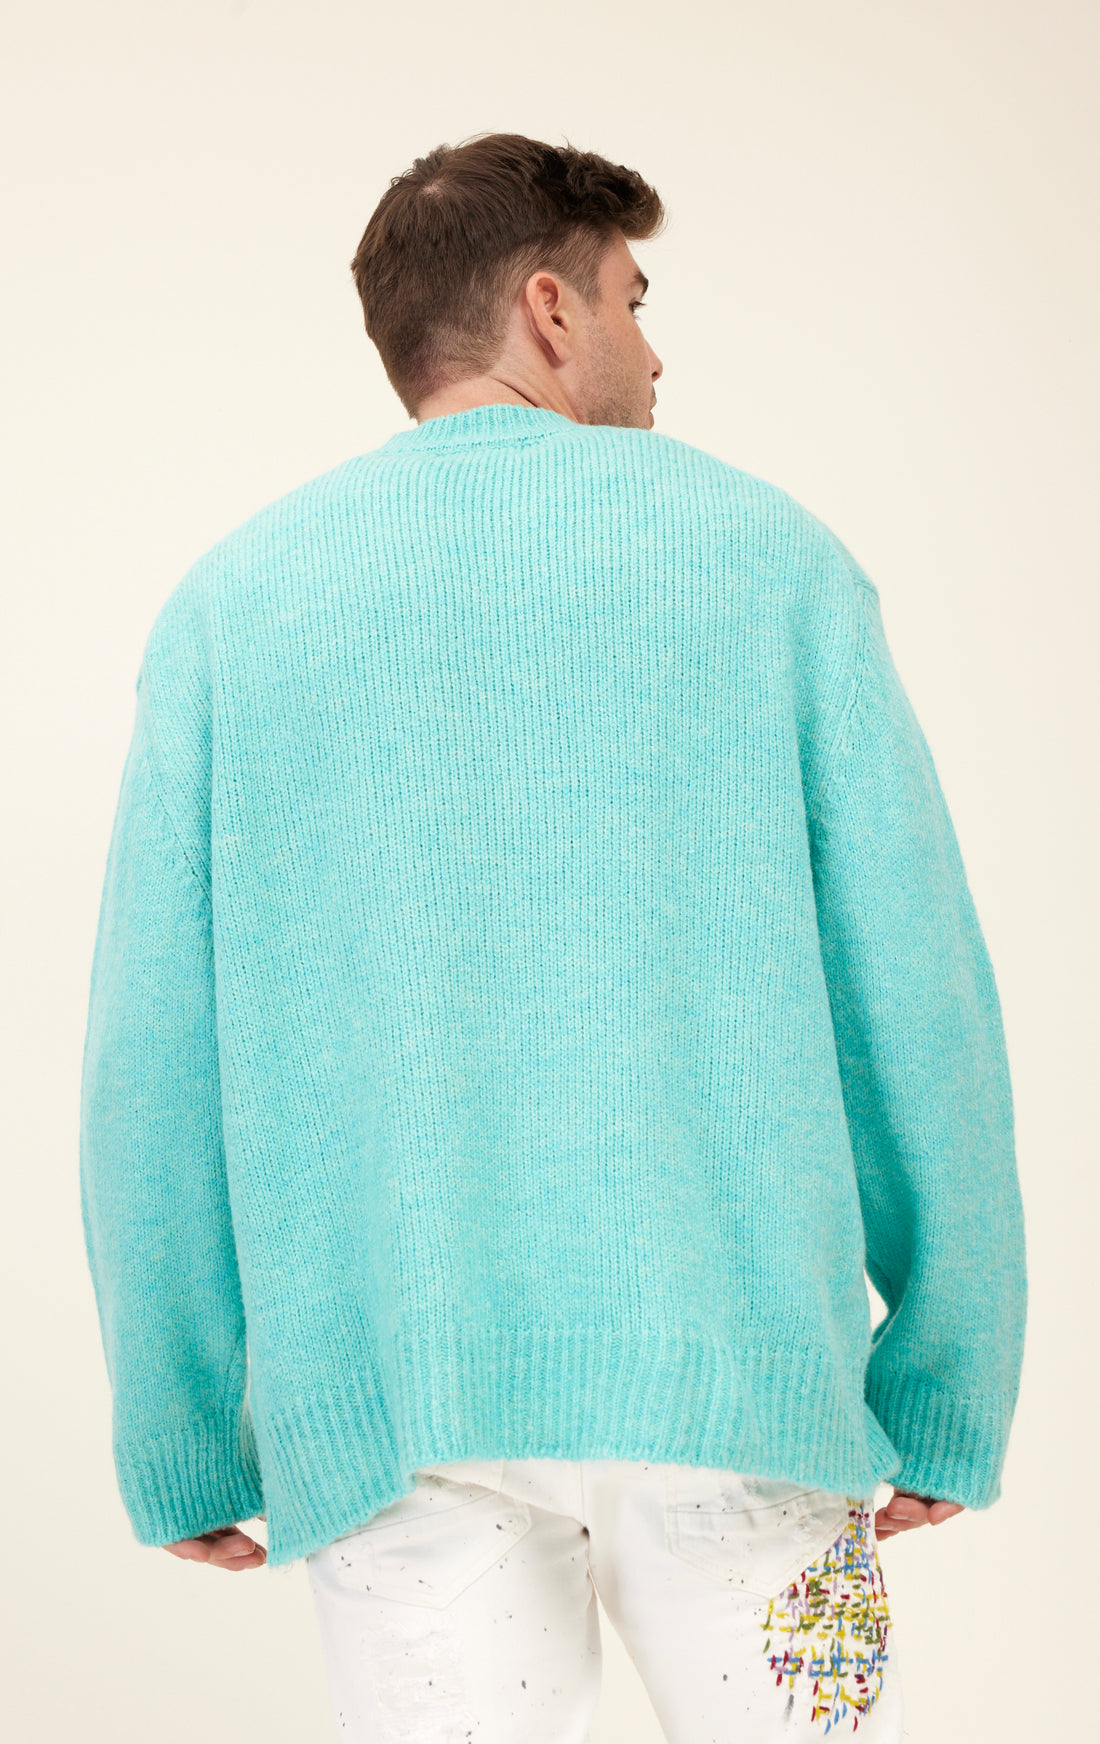 Nr. 9981 Flauschiger Pullover aus Wollmischung – Türkis